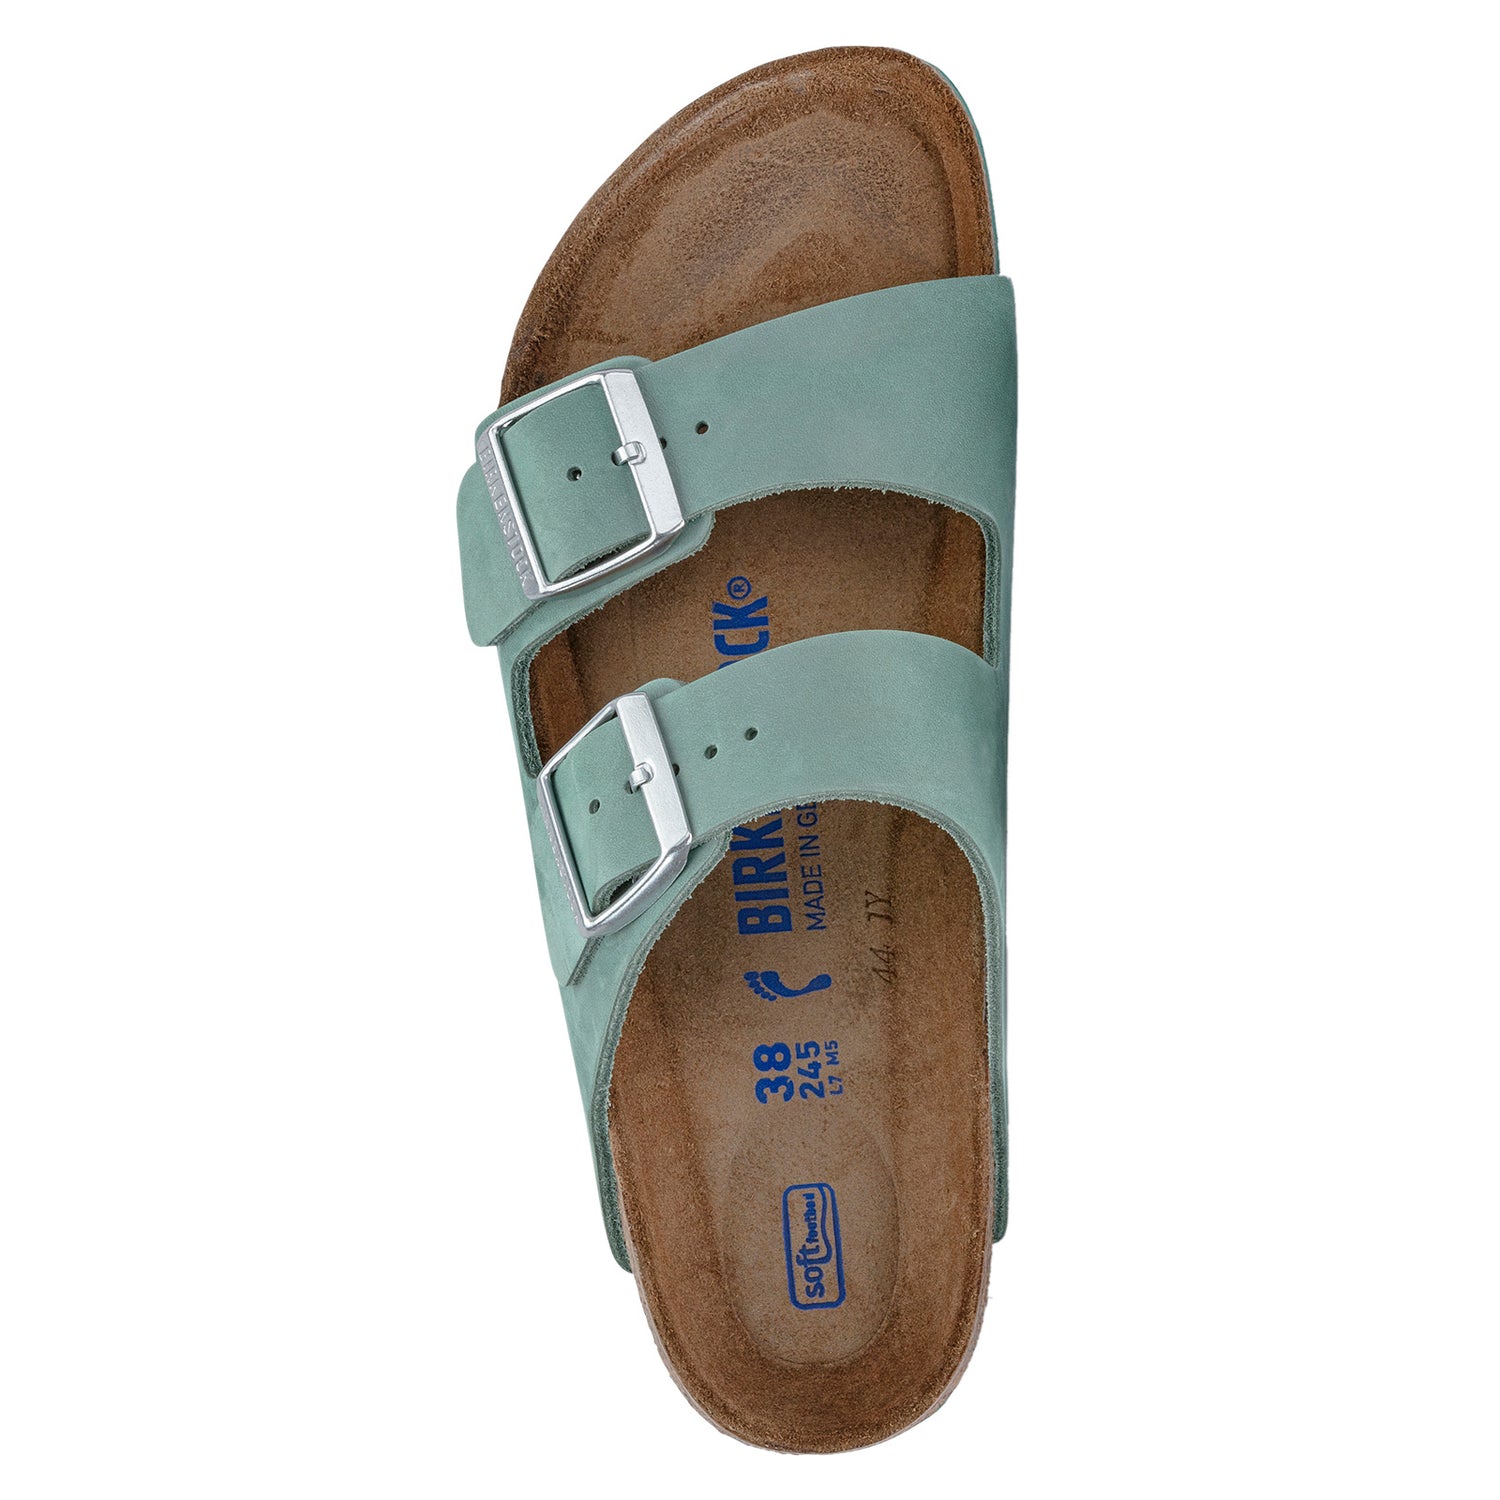 Peltz Shoes  Women's Birkenstock Arizona Soft Footbed Sandal - Narrow Width BERYL 1023 389 N